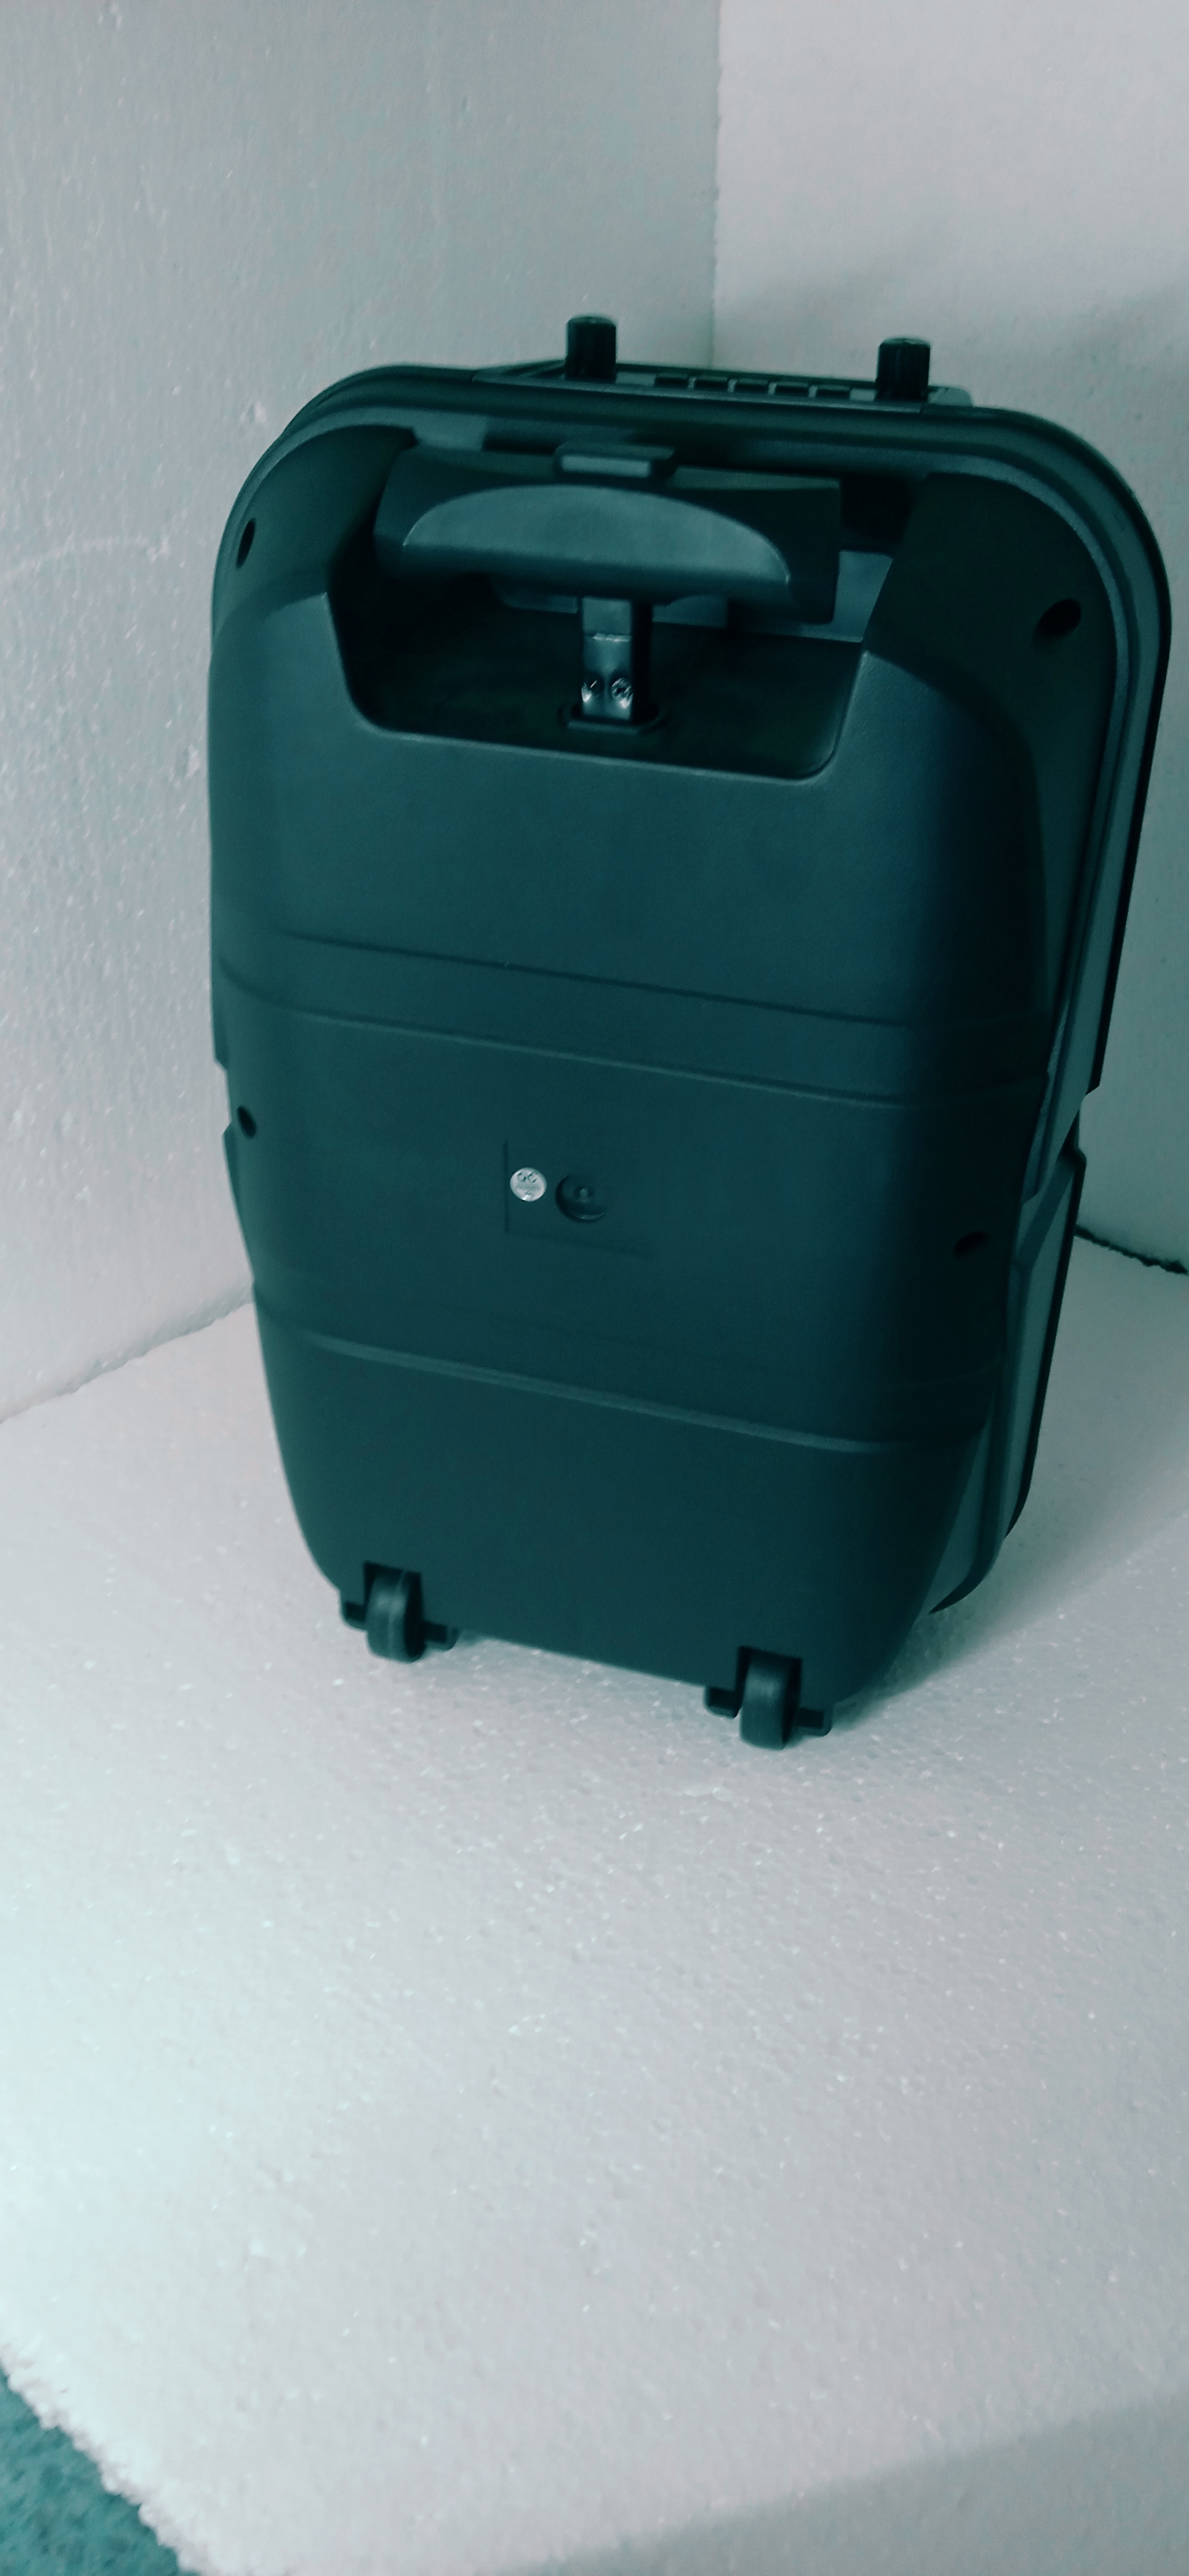 اسپیکر بلوتوثی 8 اینچ چمدانی zqs 8120